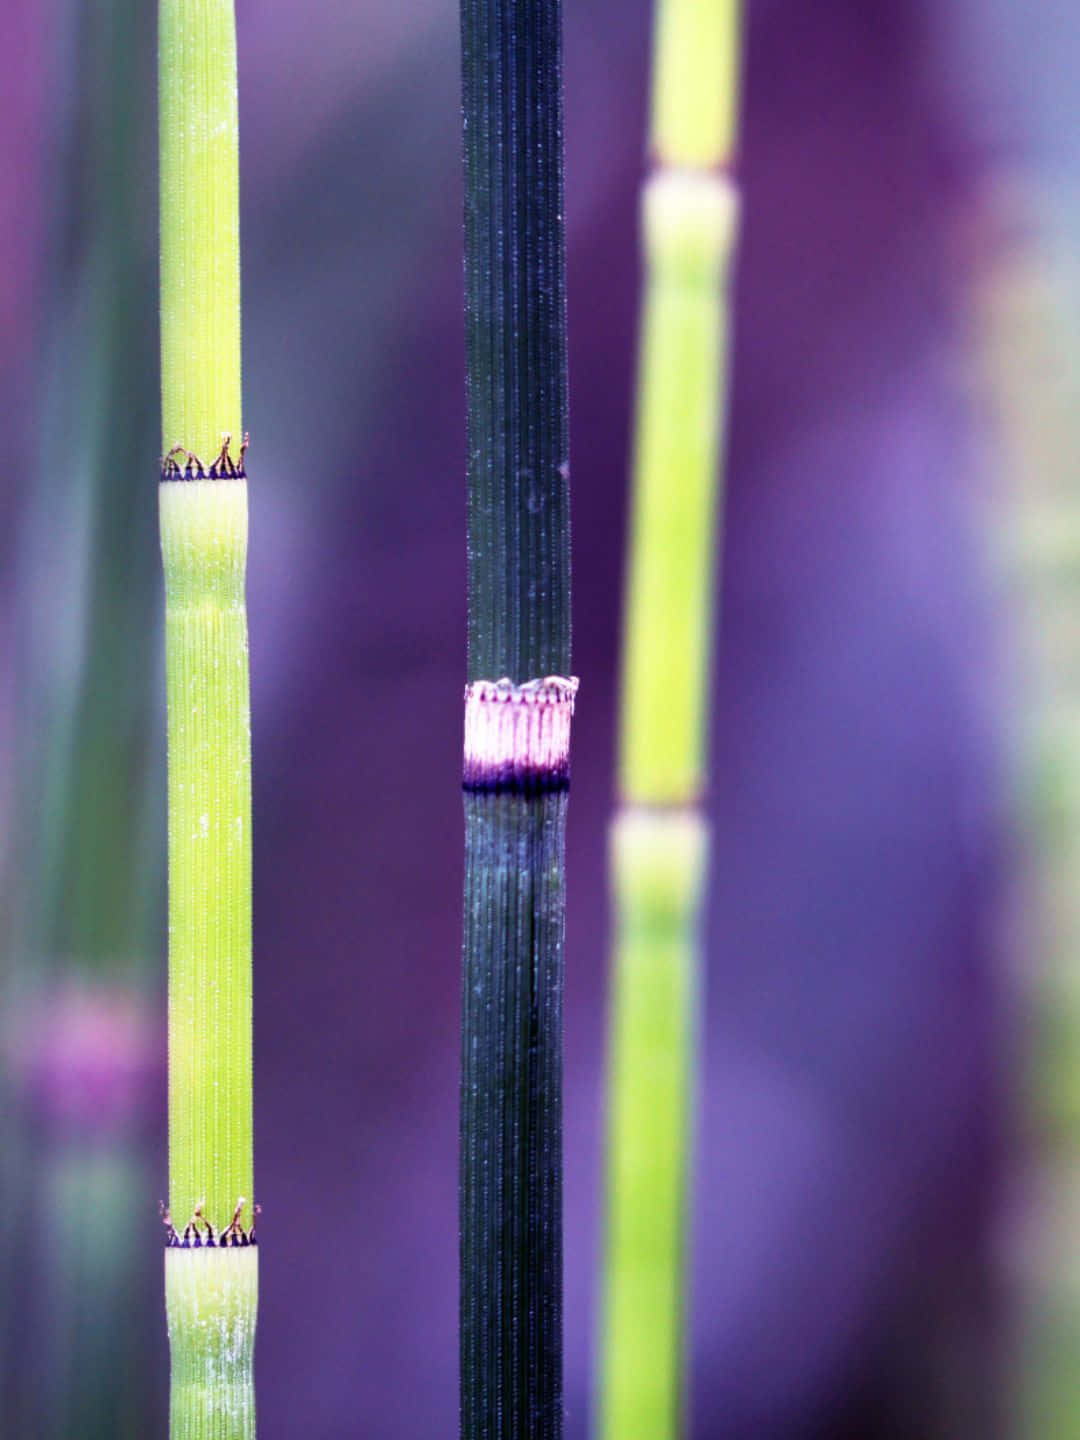 1440p Bamboo Background Purple Backdrop